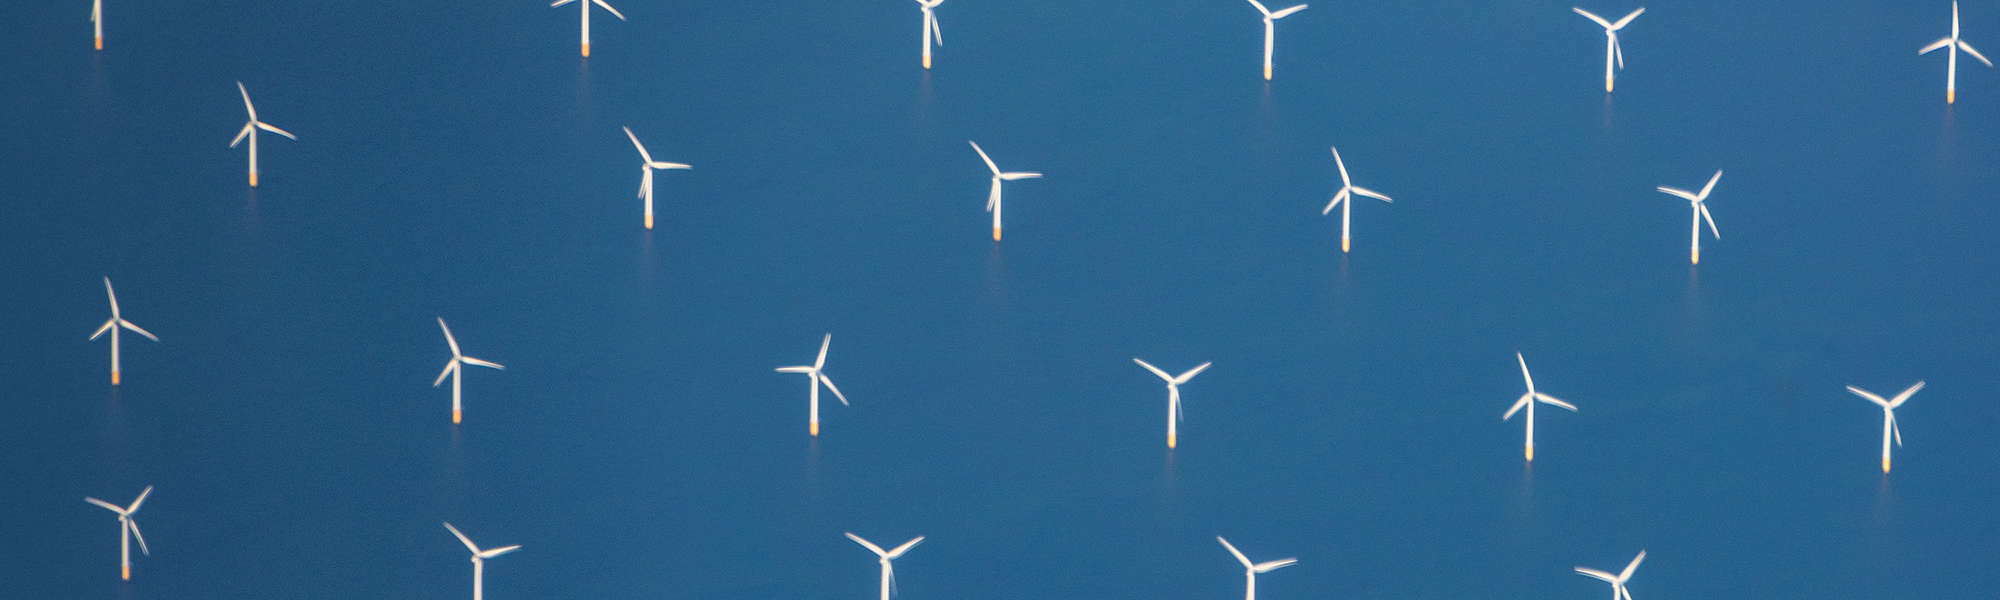 windmills on sea banner